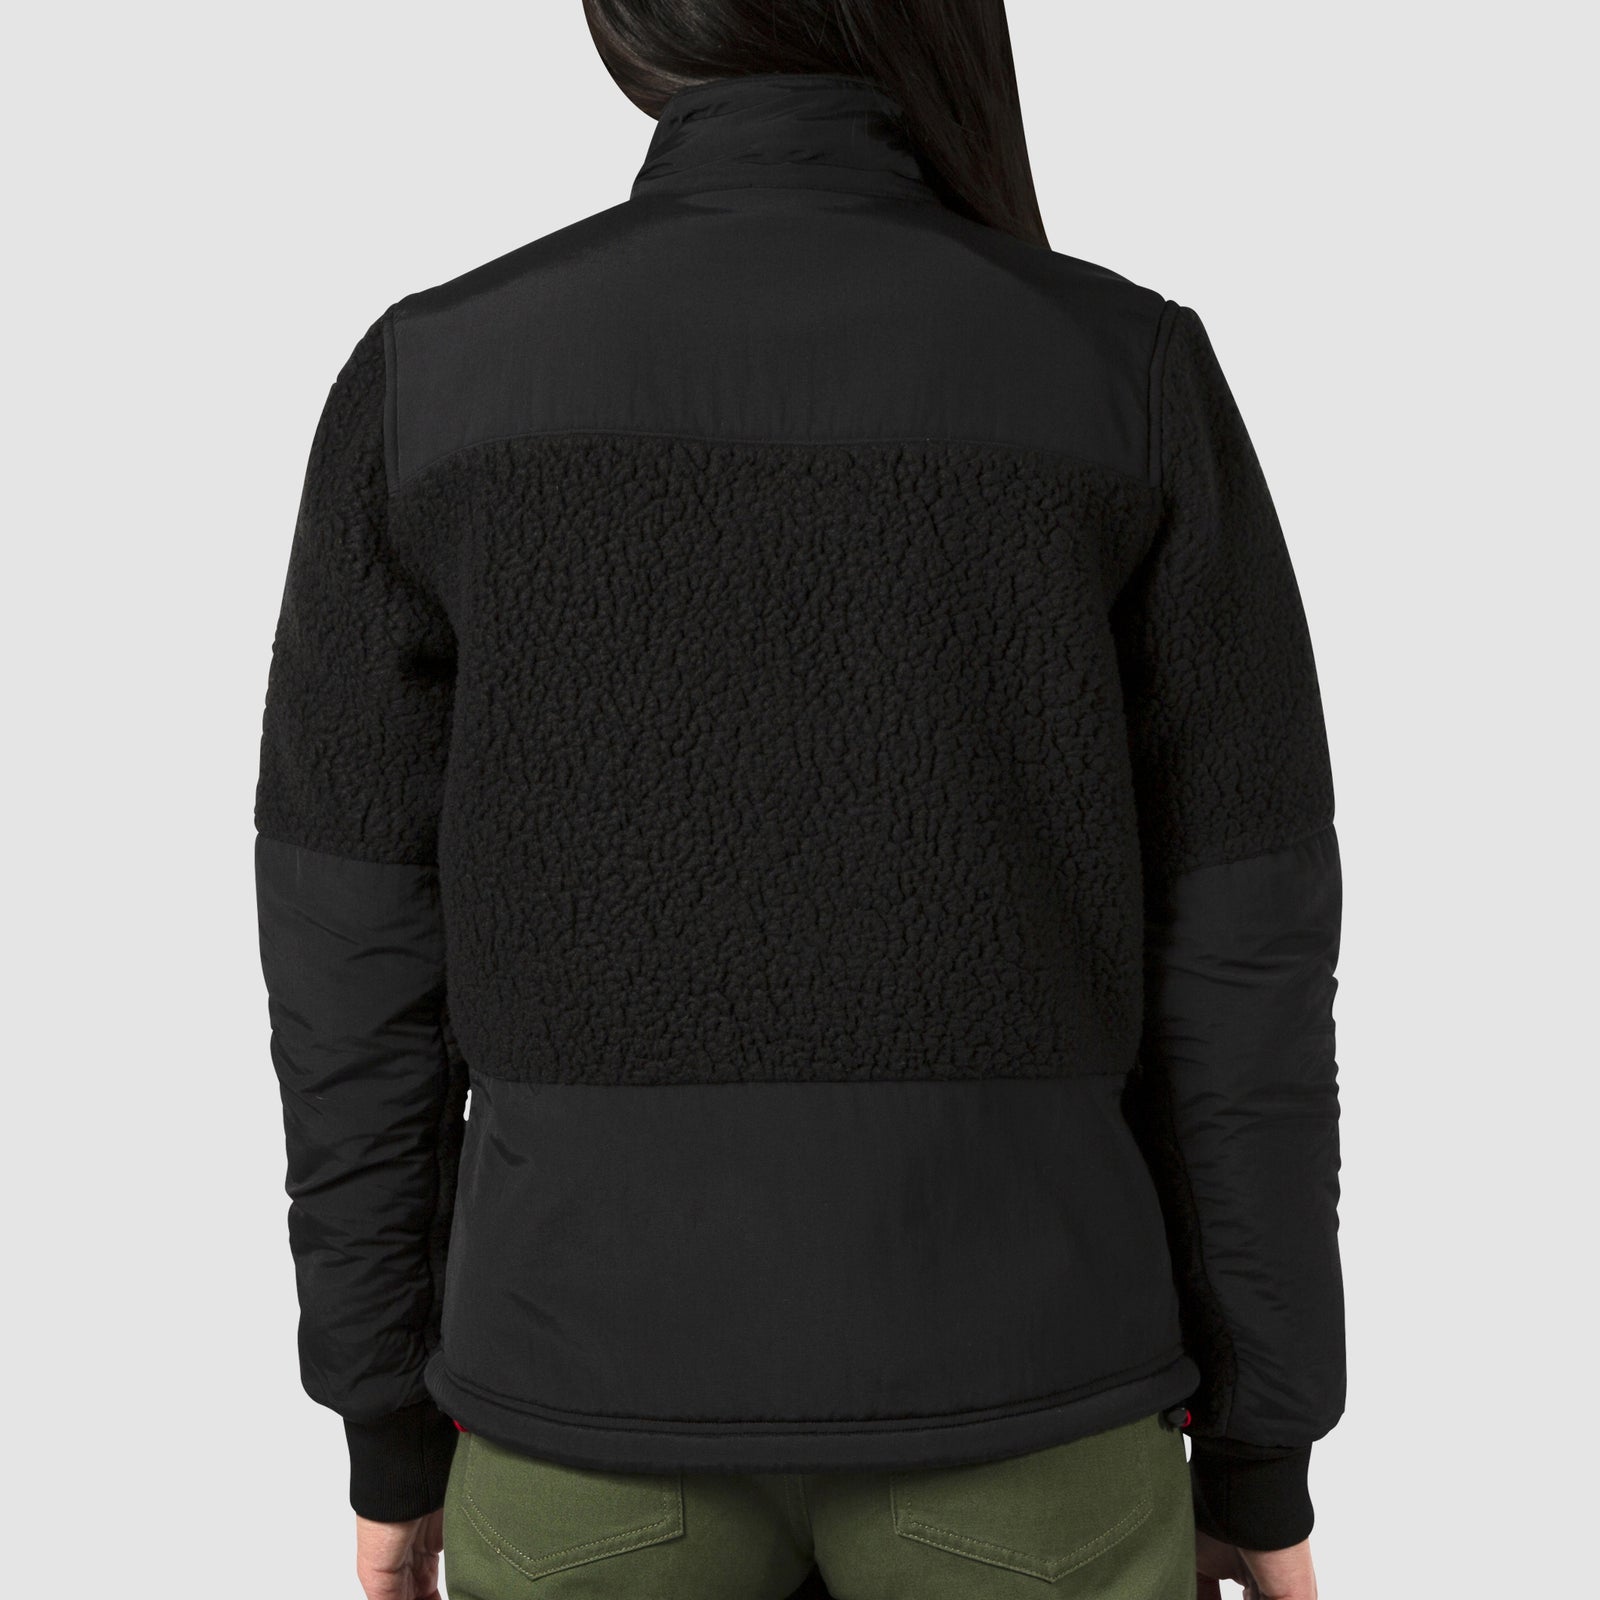 General back model shot of the women's subalpine fleece in black.